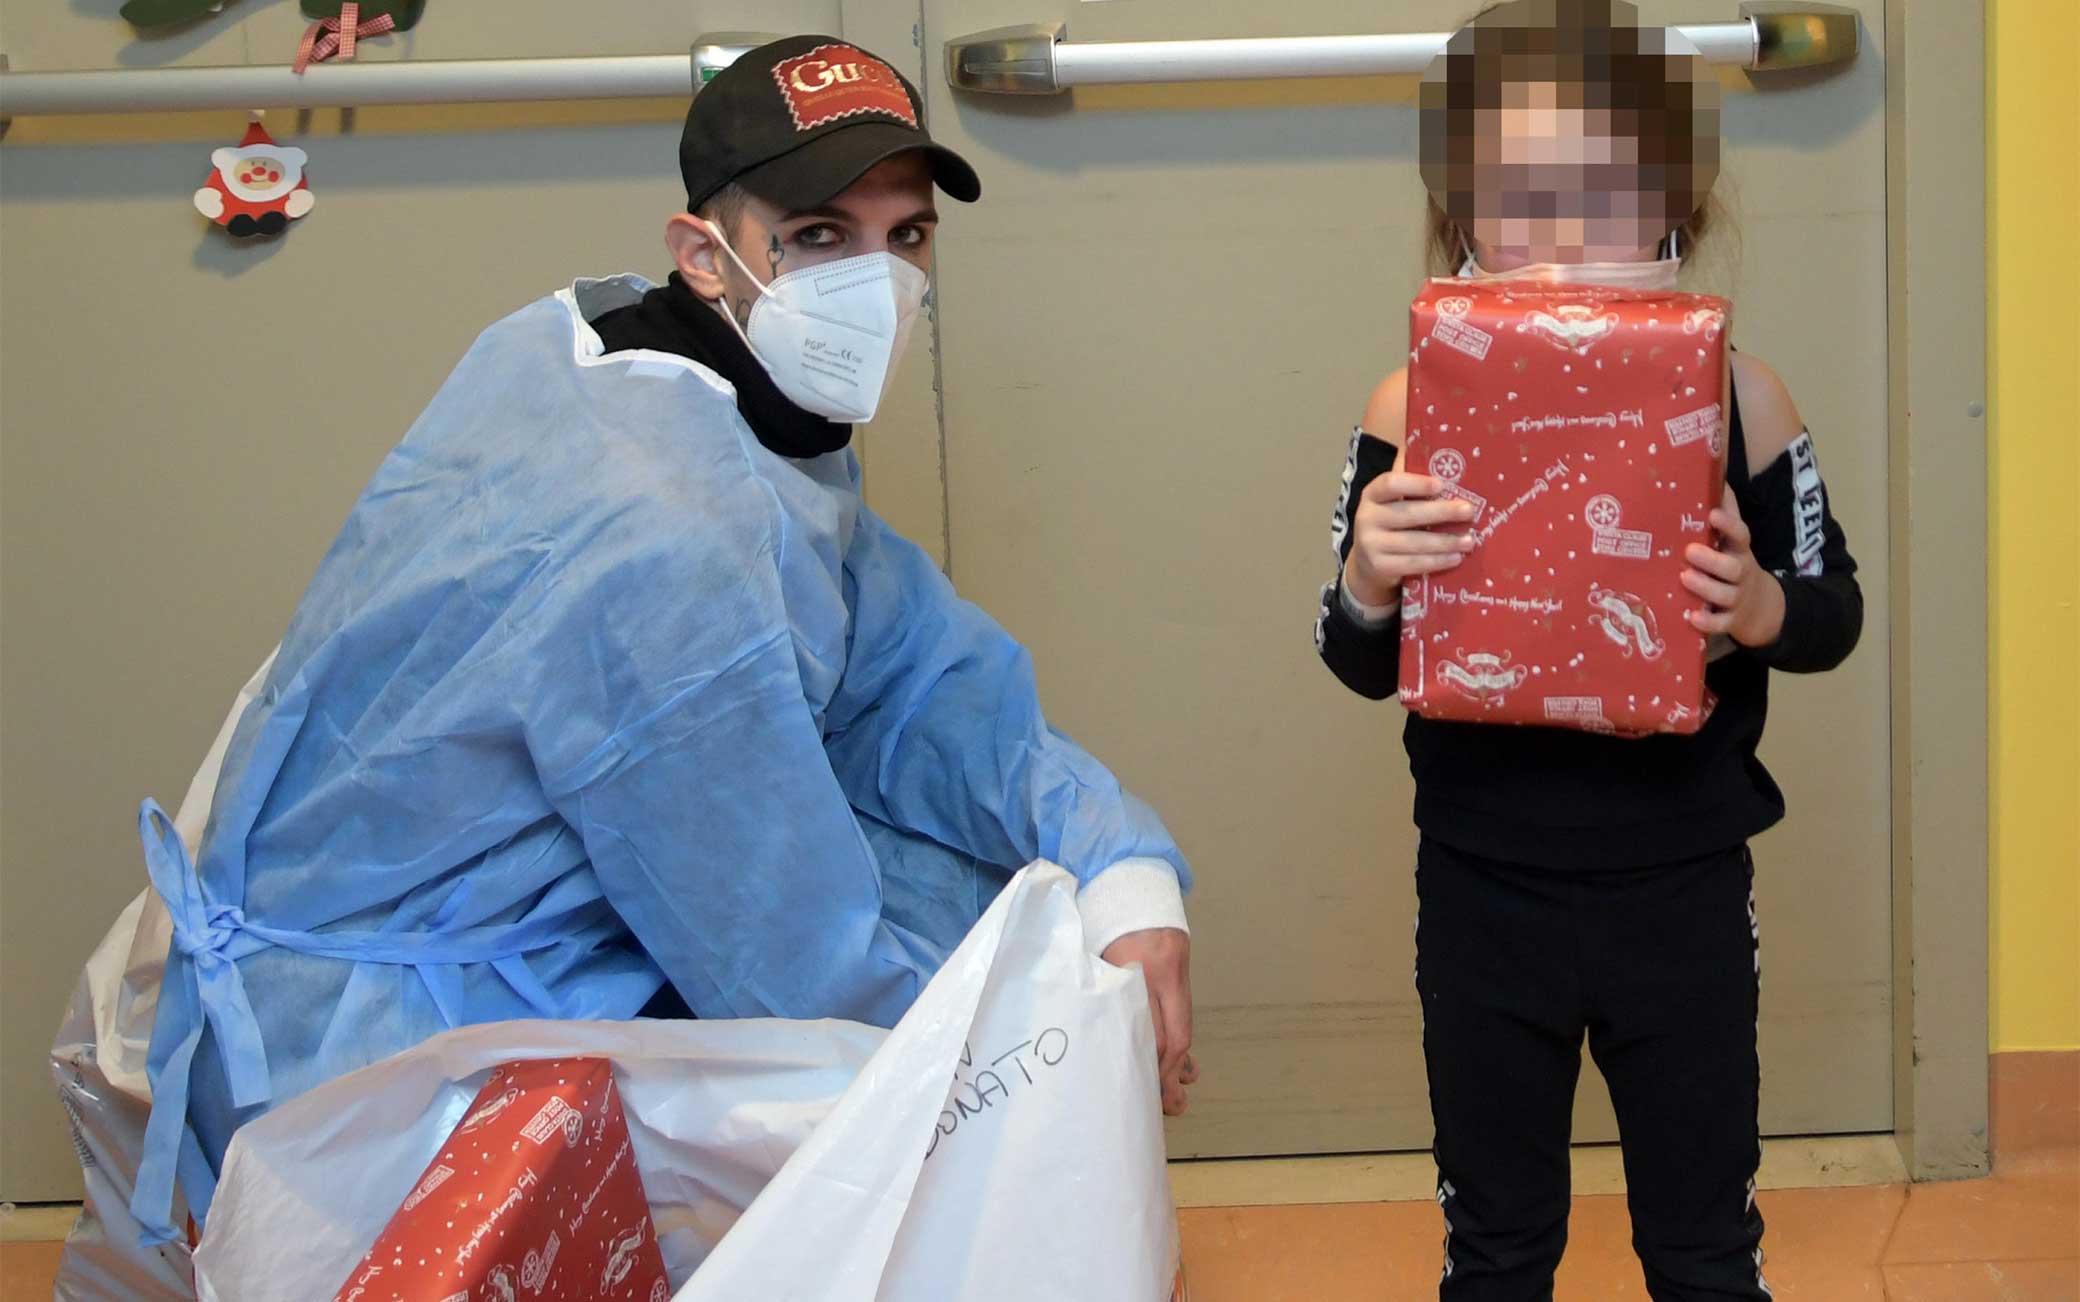 Achille Lauro becomes “Santa Claus” for the children of the San Donato hospital